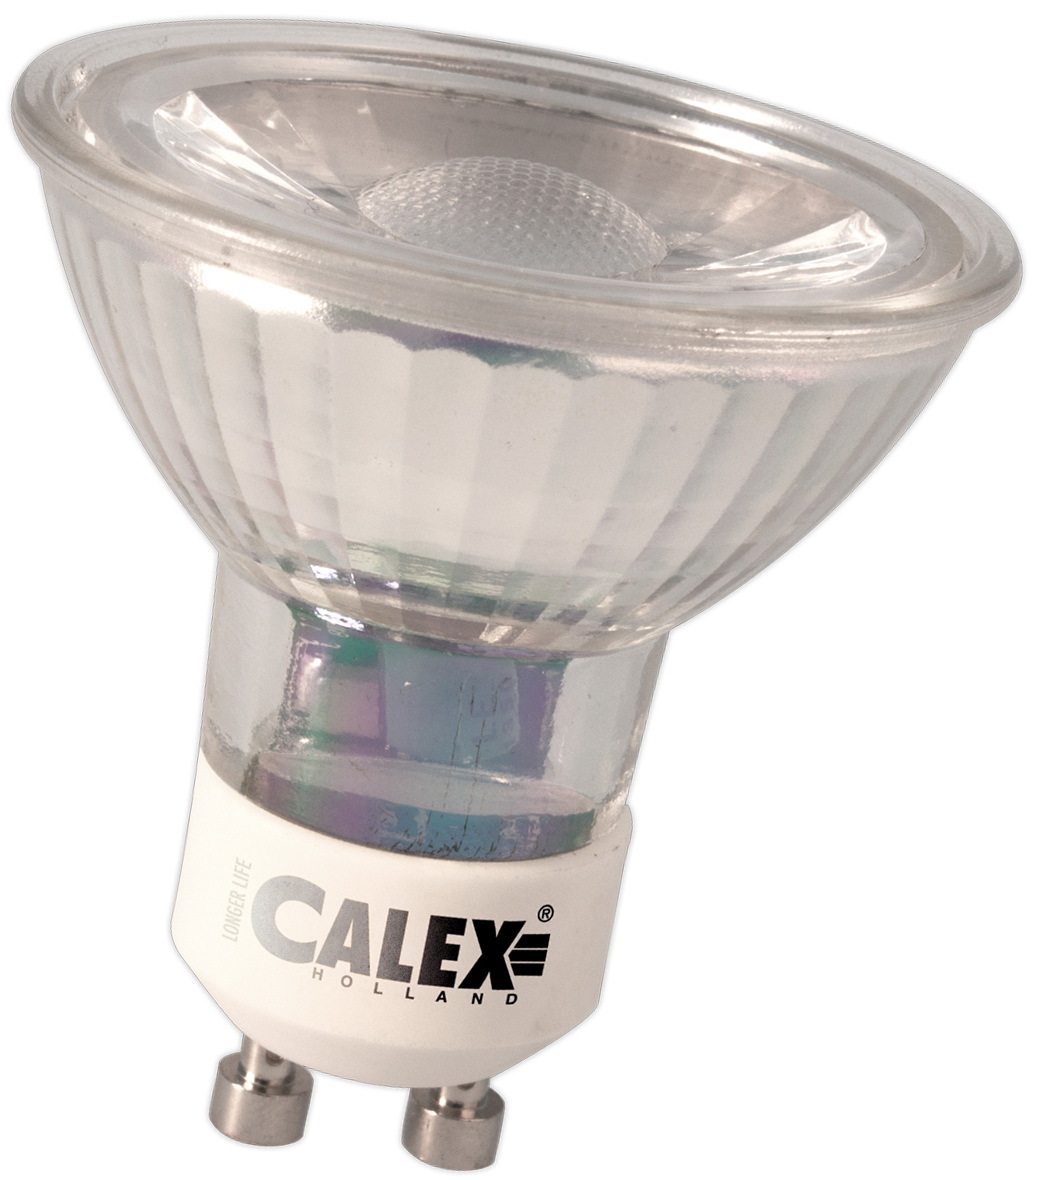 Calex COB LED GU10 3W 2800K Halogeen look